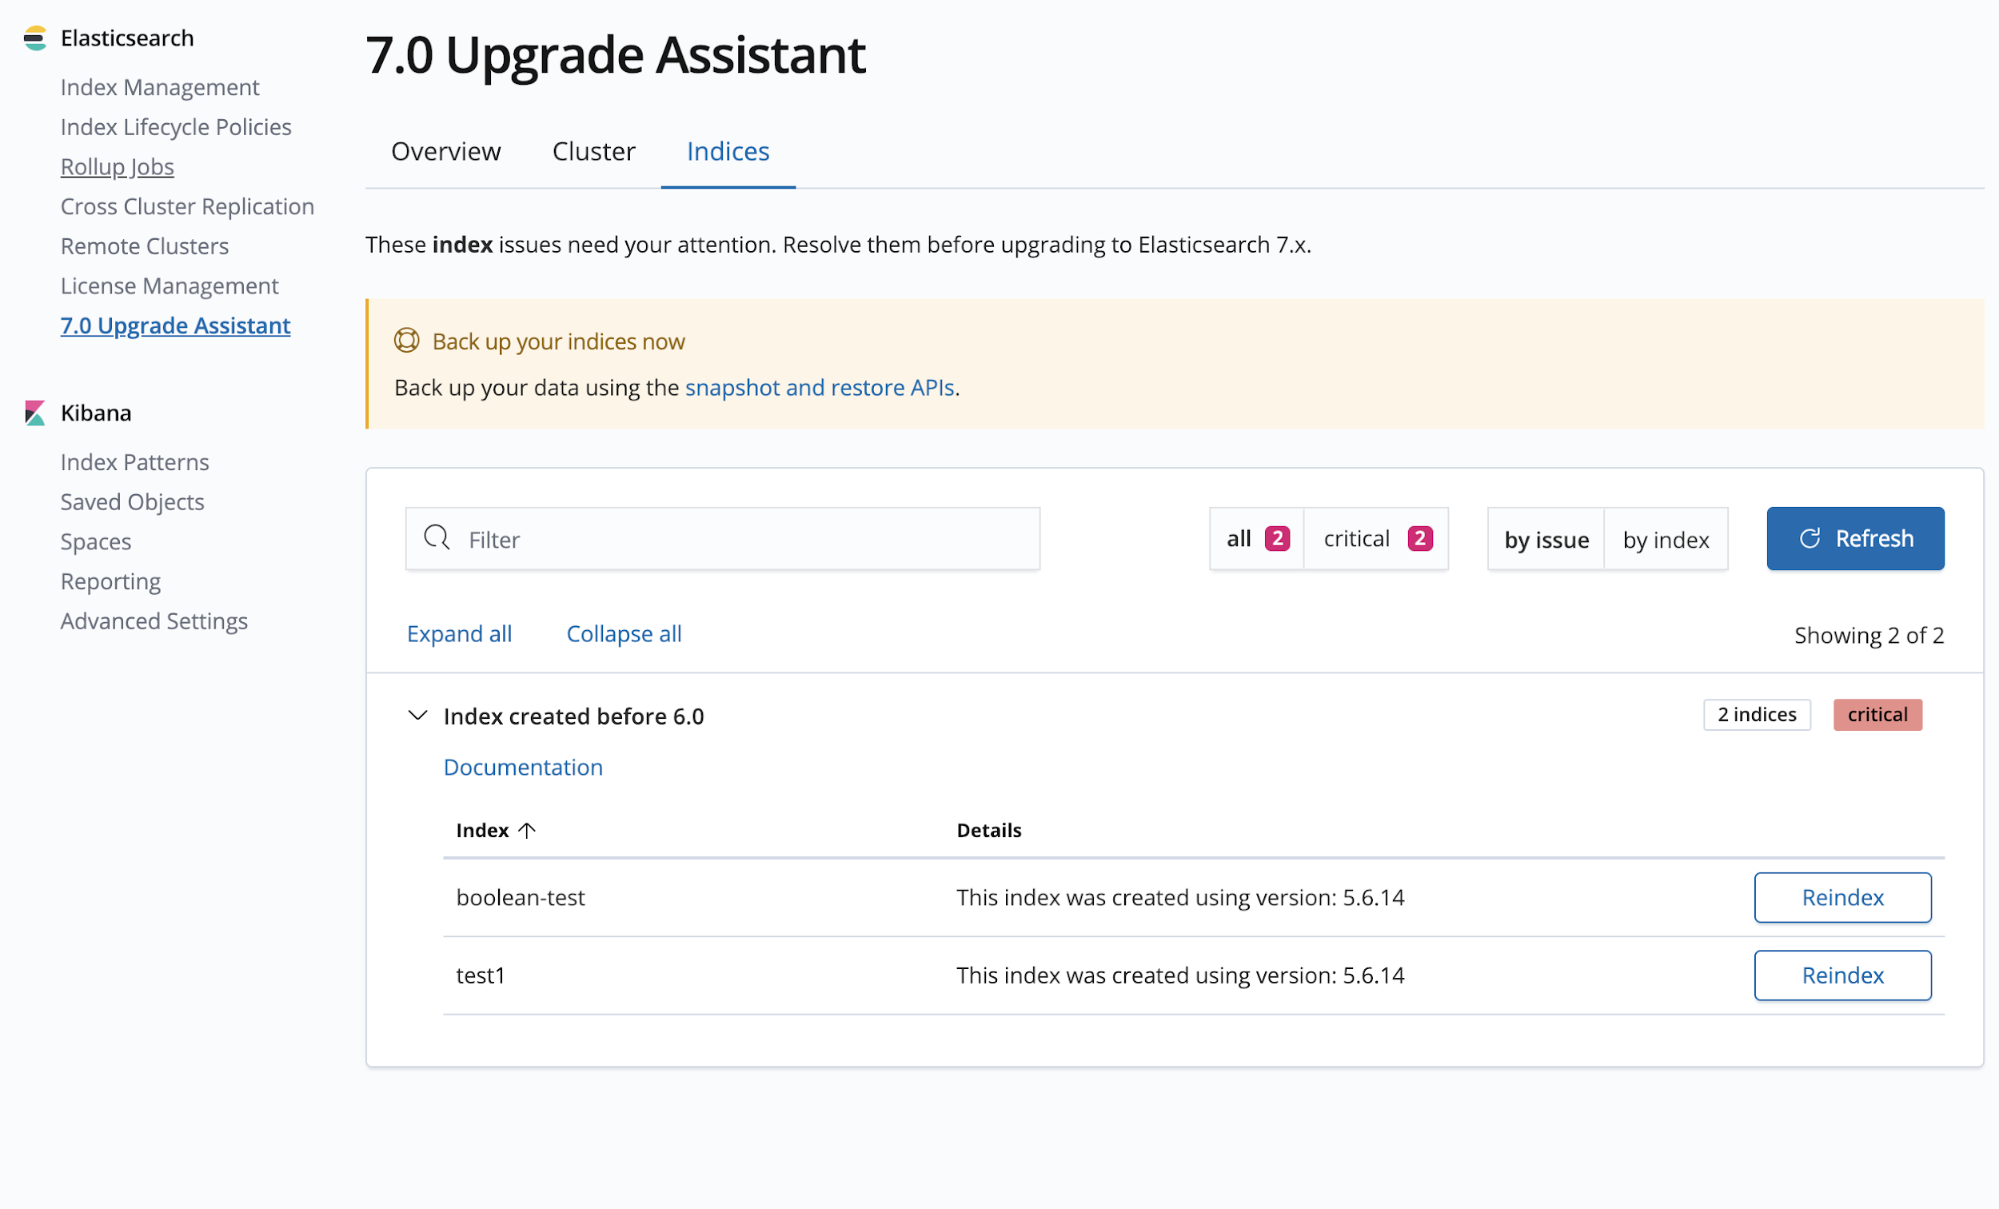 management upgrade assistant 7.0